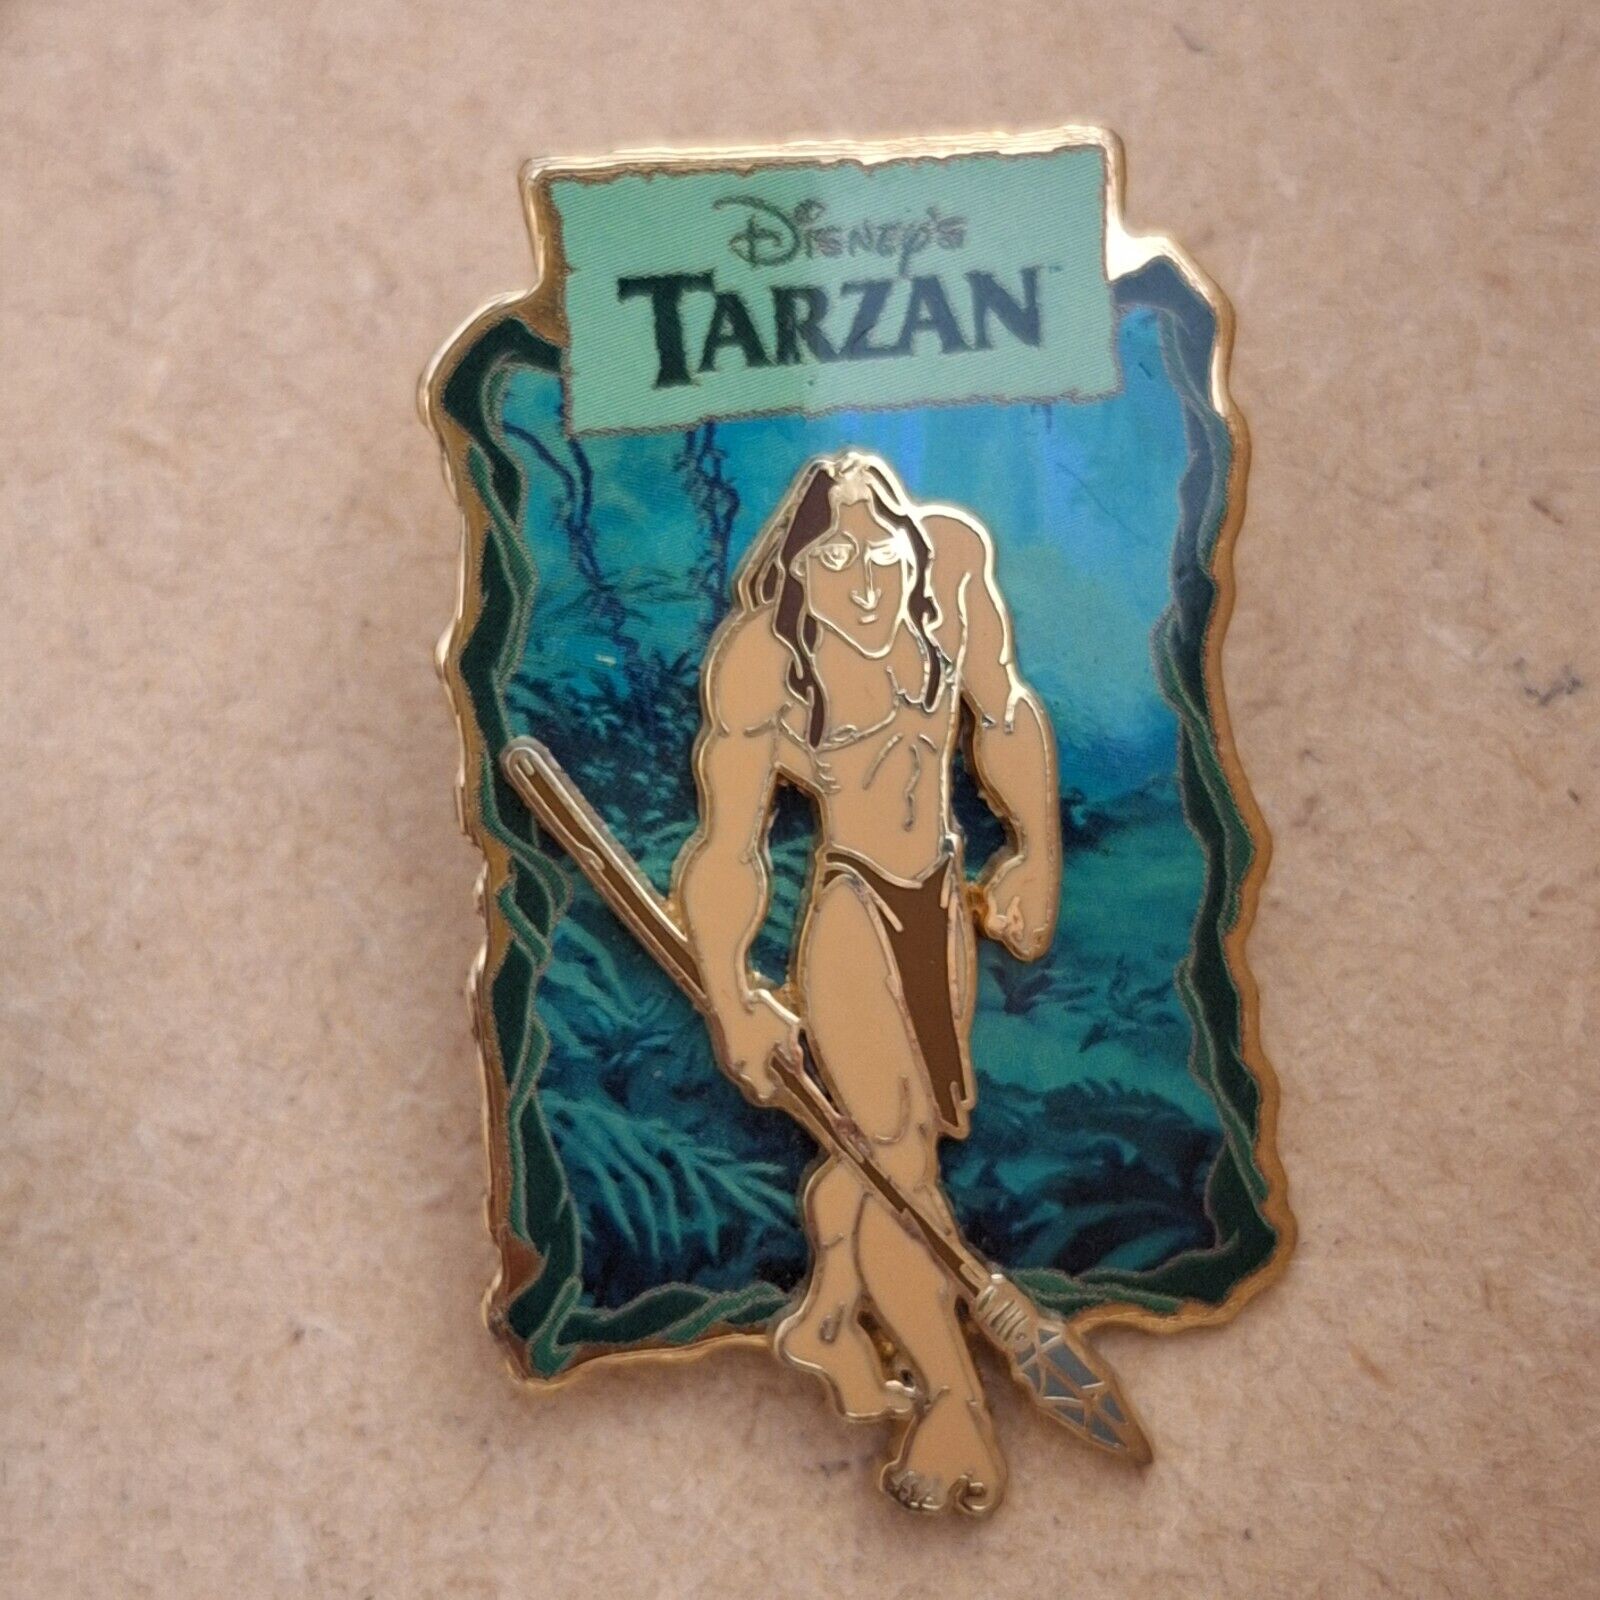 Tarzan Disneyland Pin Badge Vintage Collectible